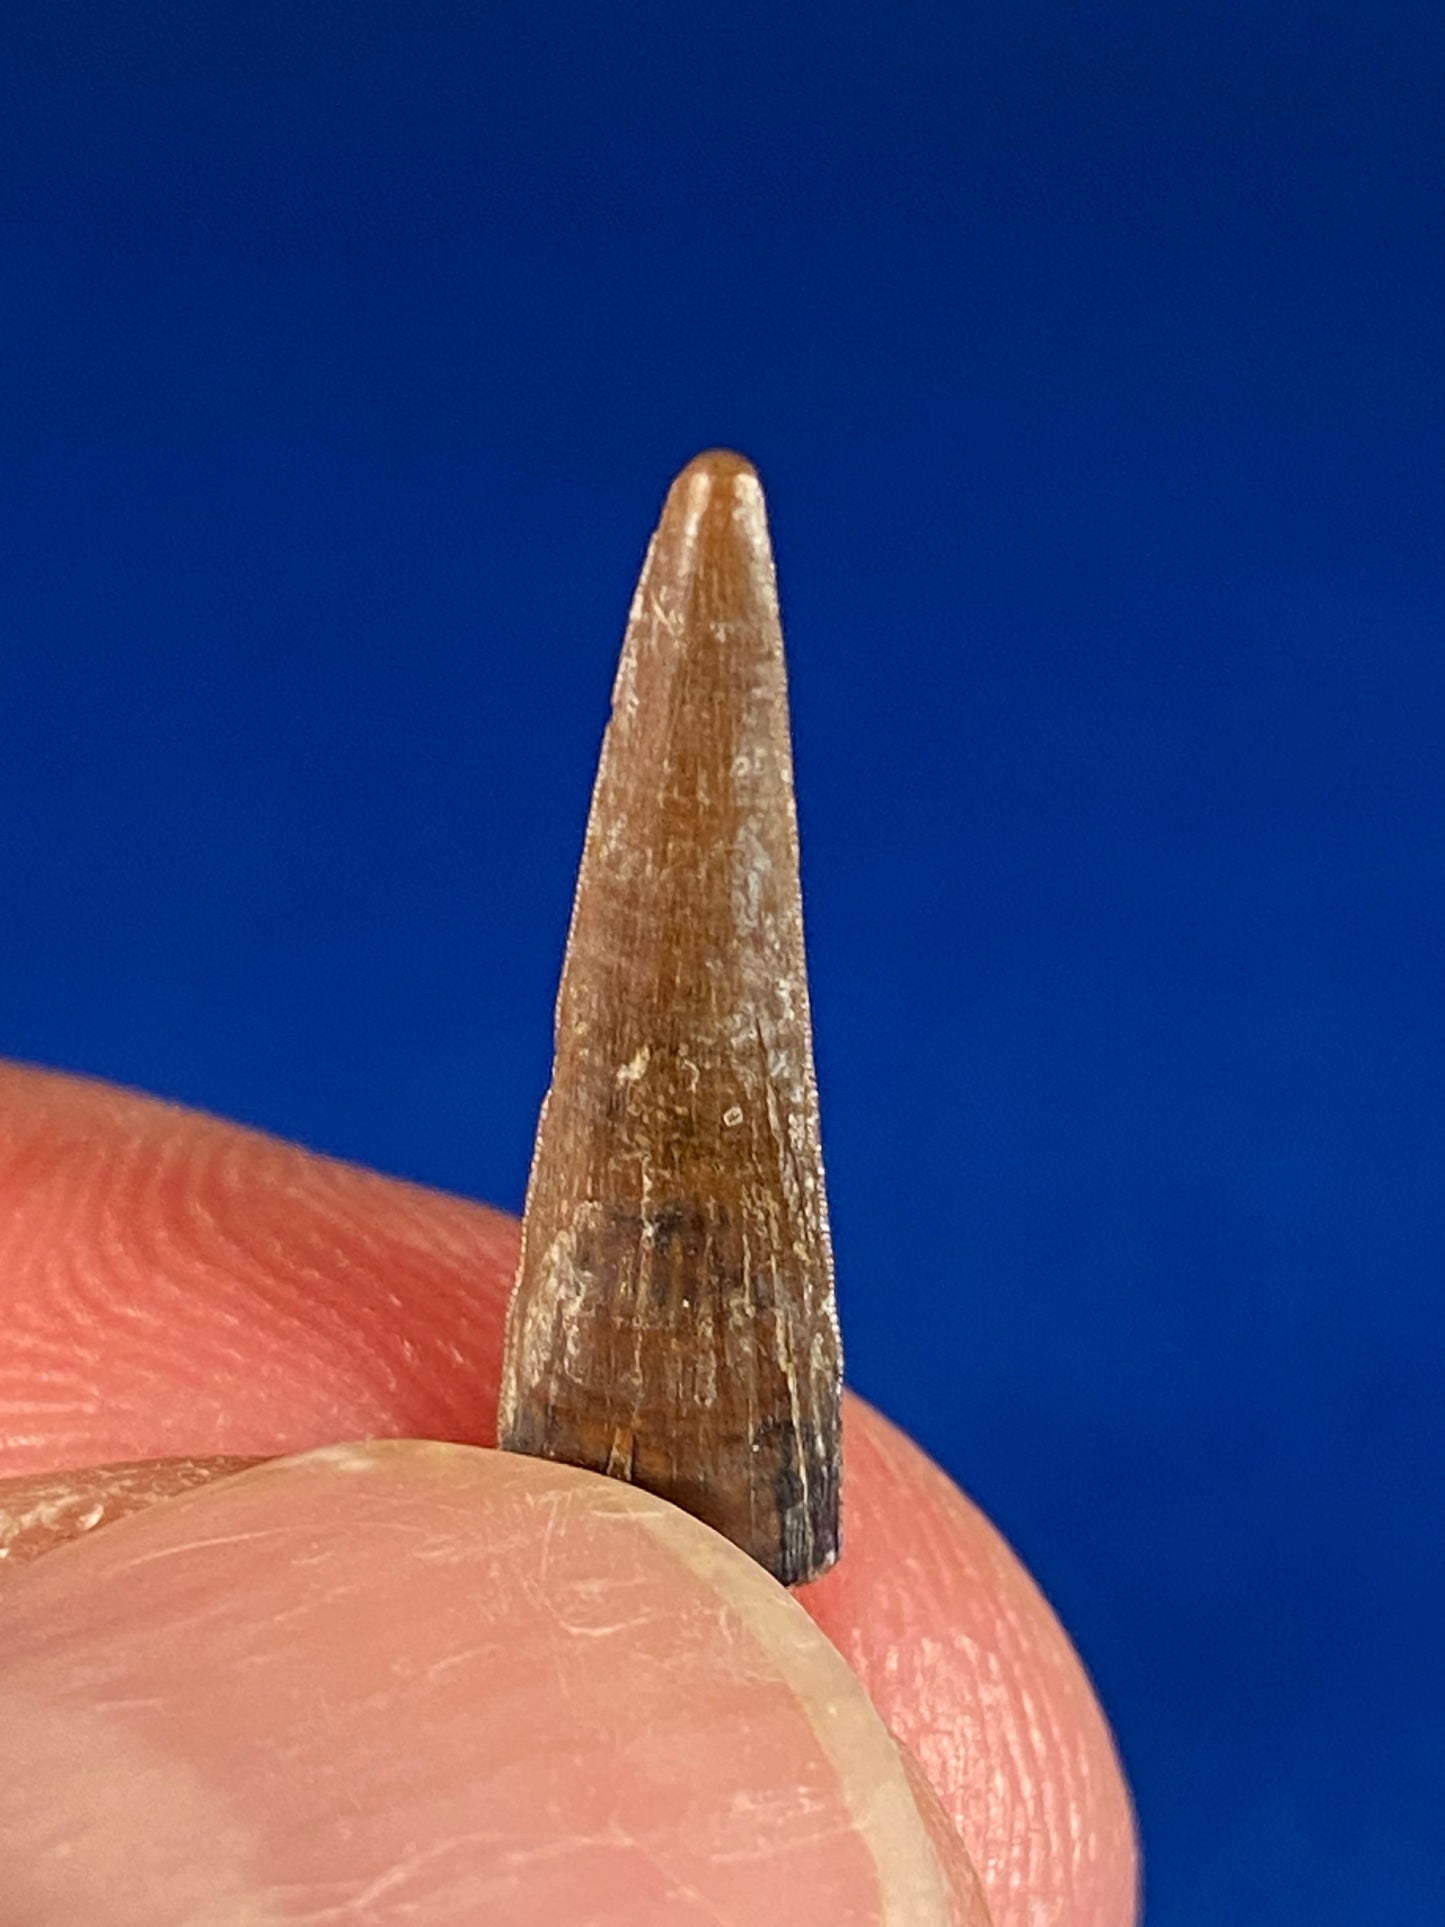 Richardoestesia tooth (3/4"), Hell Creek Formation, Garfield County, Montana